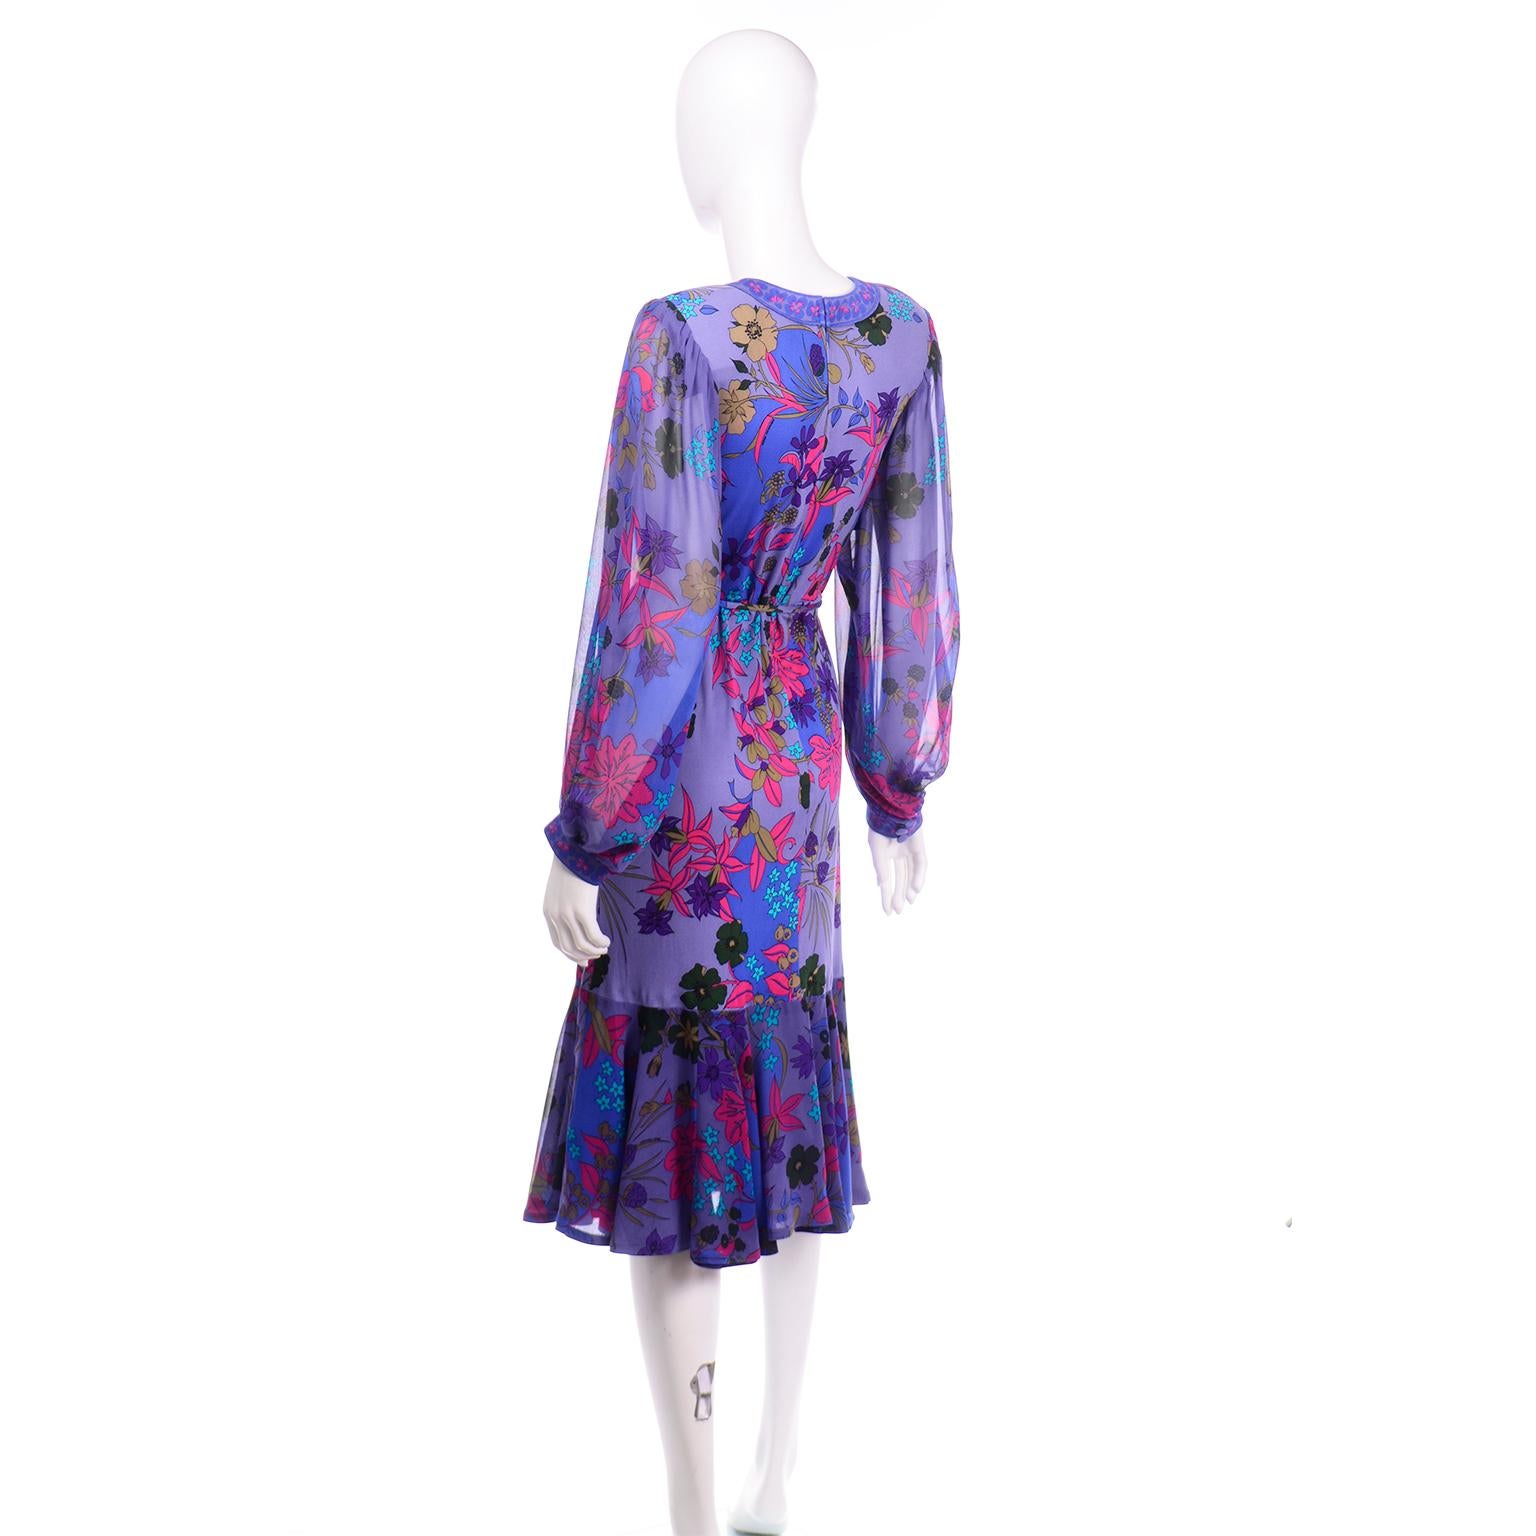 Averardo Bessi Italy Vintage Purple Floral Silk Jersey Dress With Belt 1